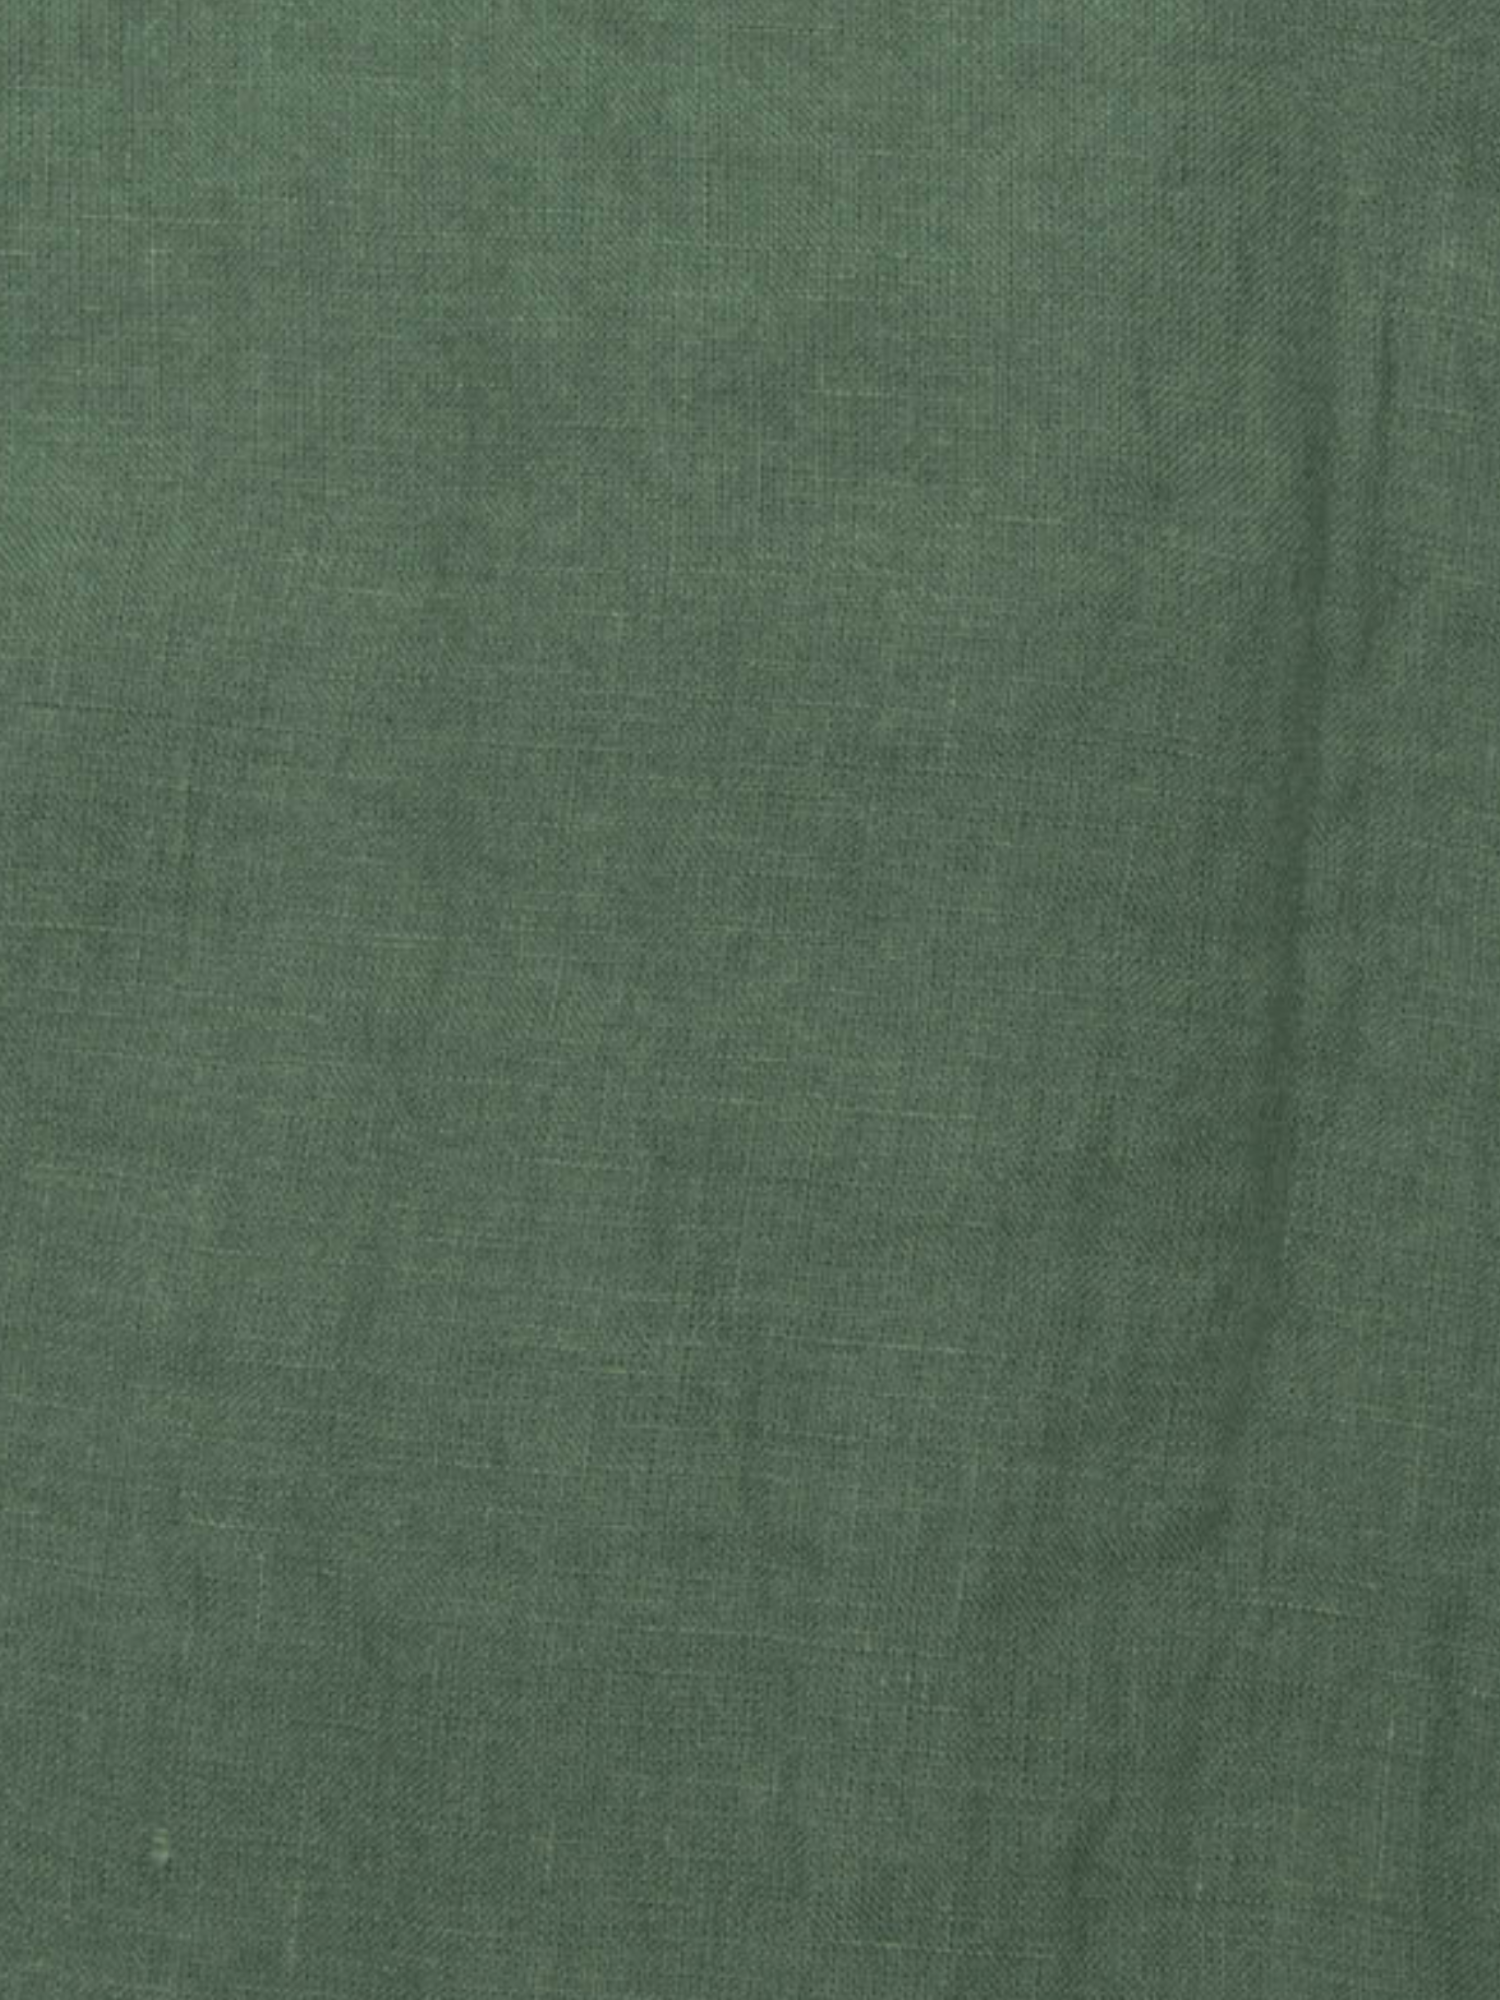 Linen Shower curtain in Green color Dusty Linen